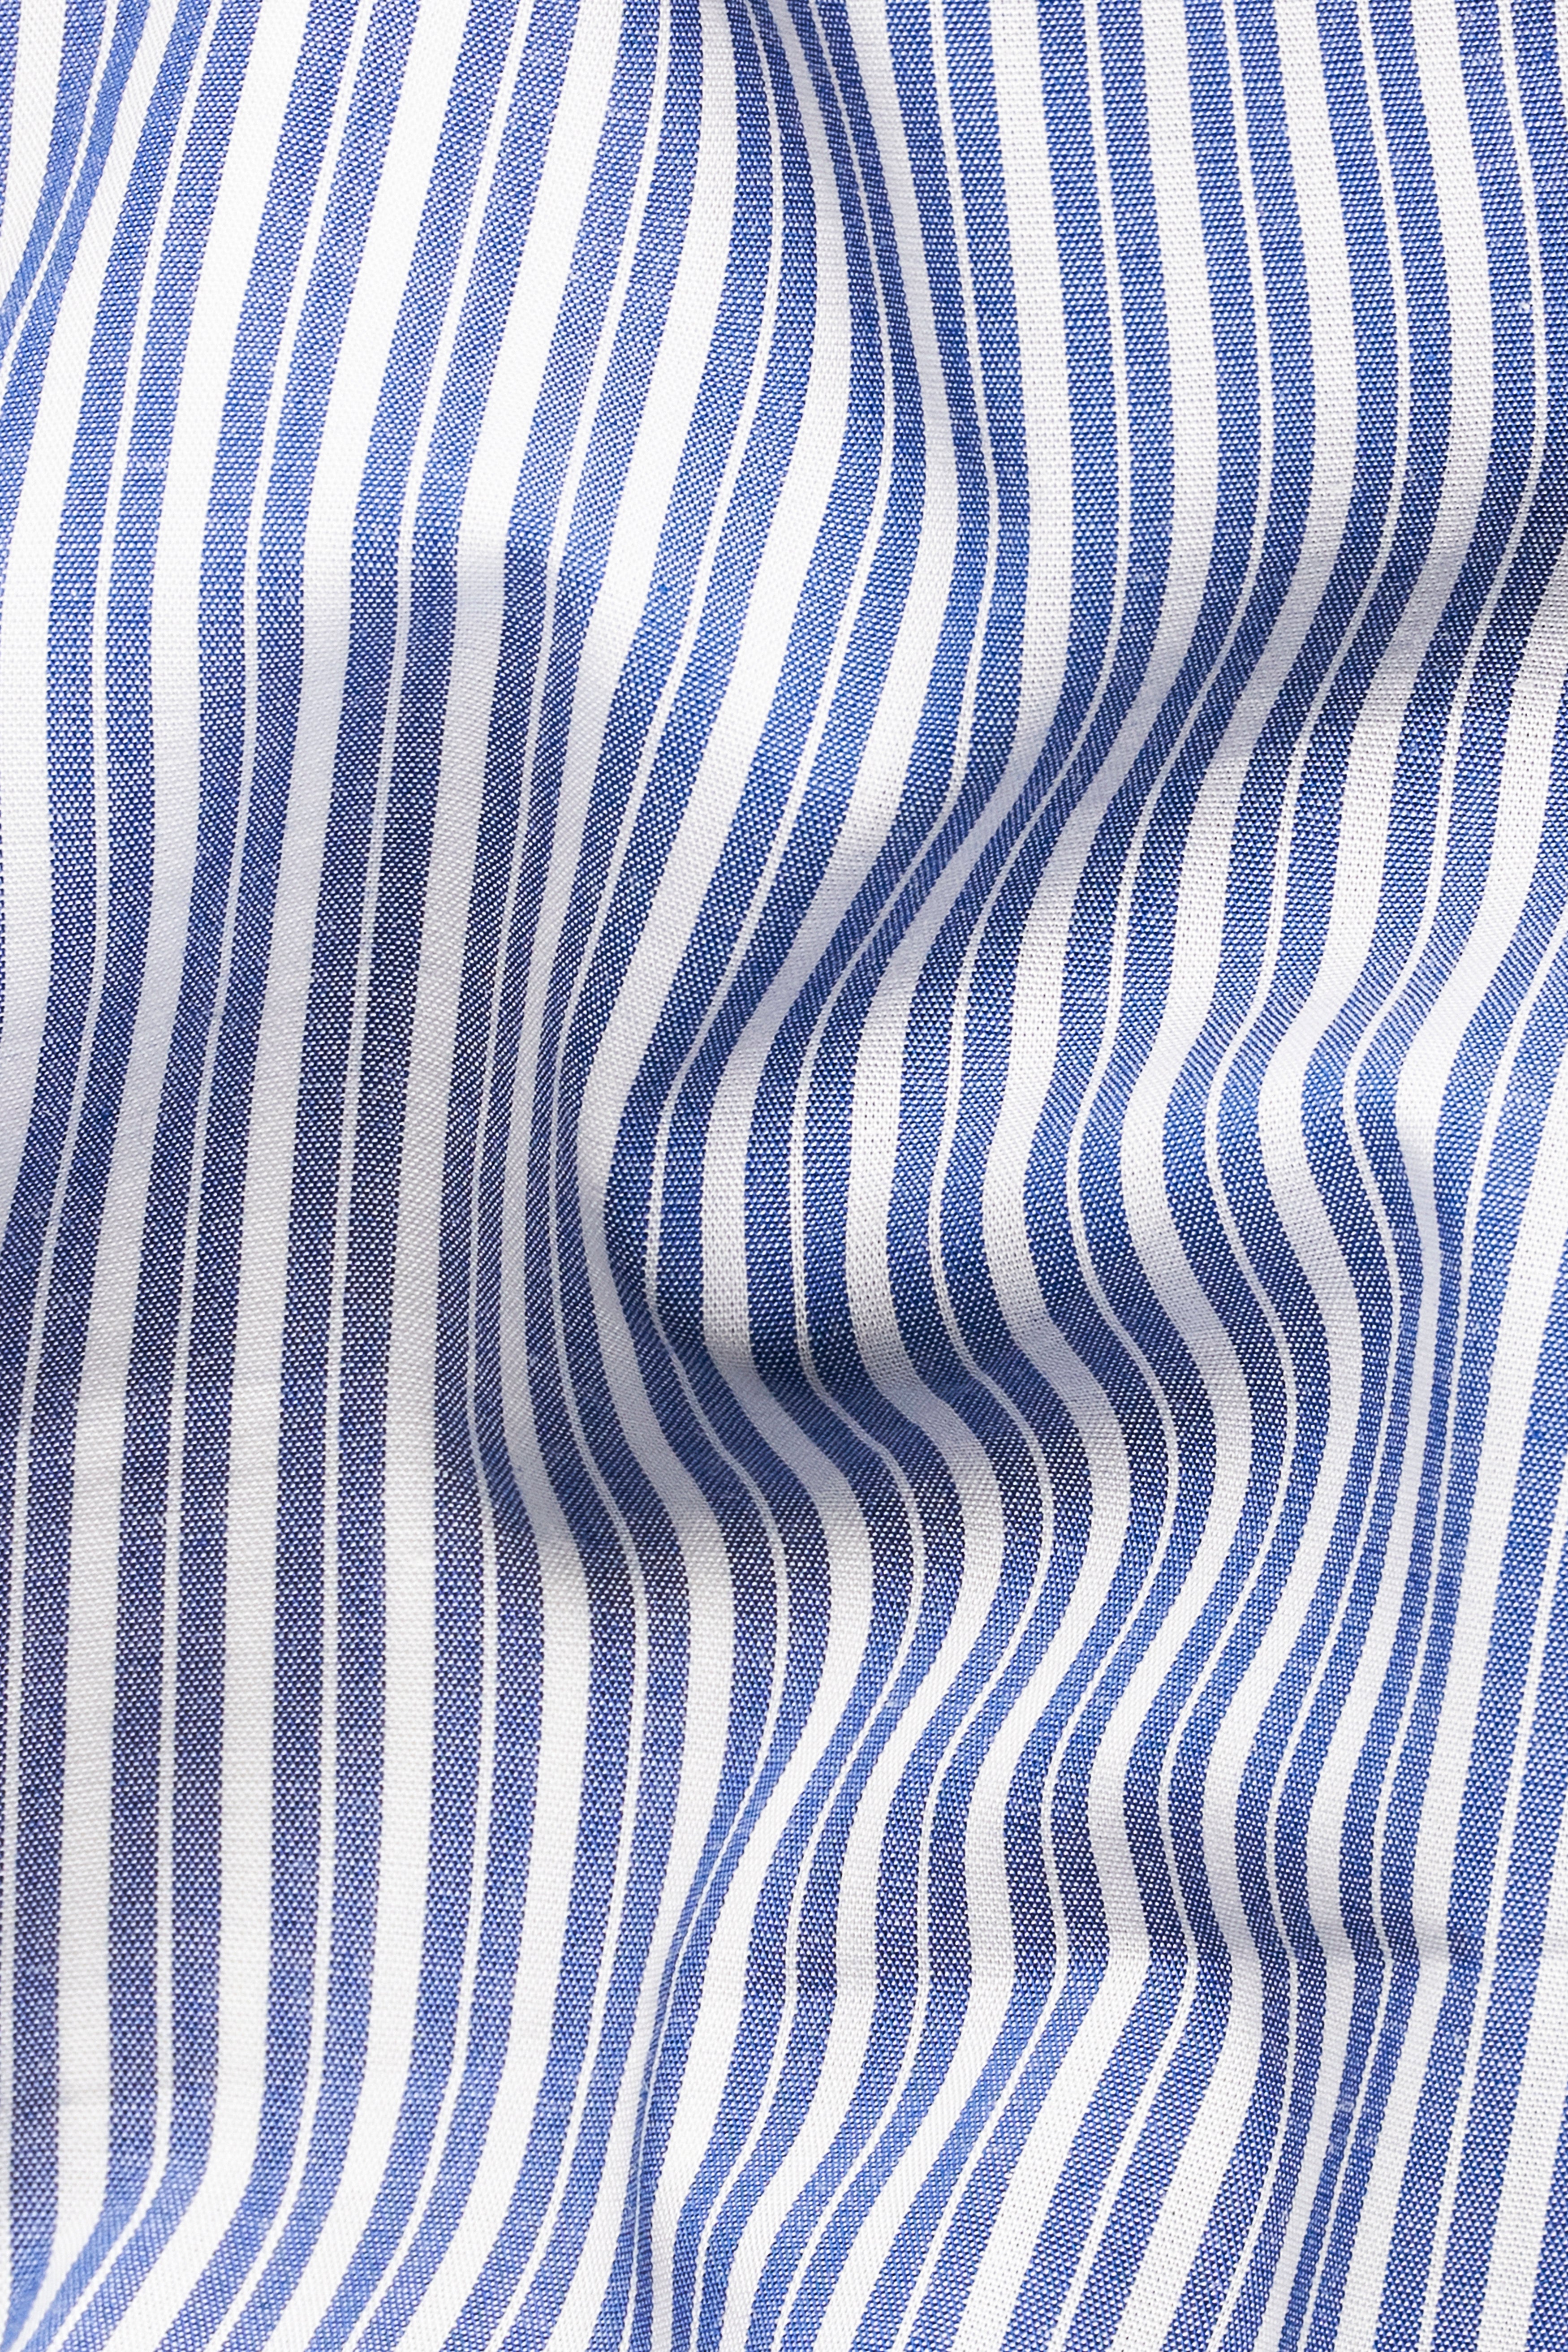 Bayoux Blue With White Striped Premium Cotton Boxer BX523-28, BX523-30, BX523-32, BX523-34, BX523-36, BX523-38, BX523-40, BX523-42, BX523-44